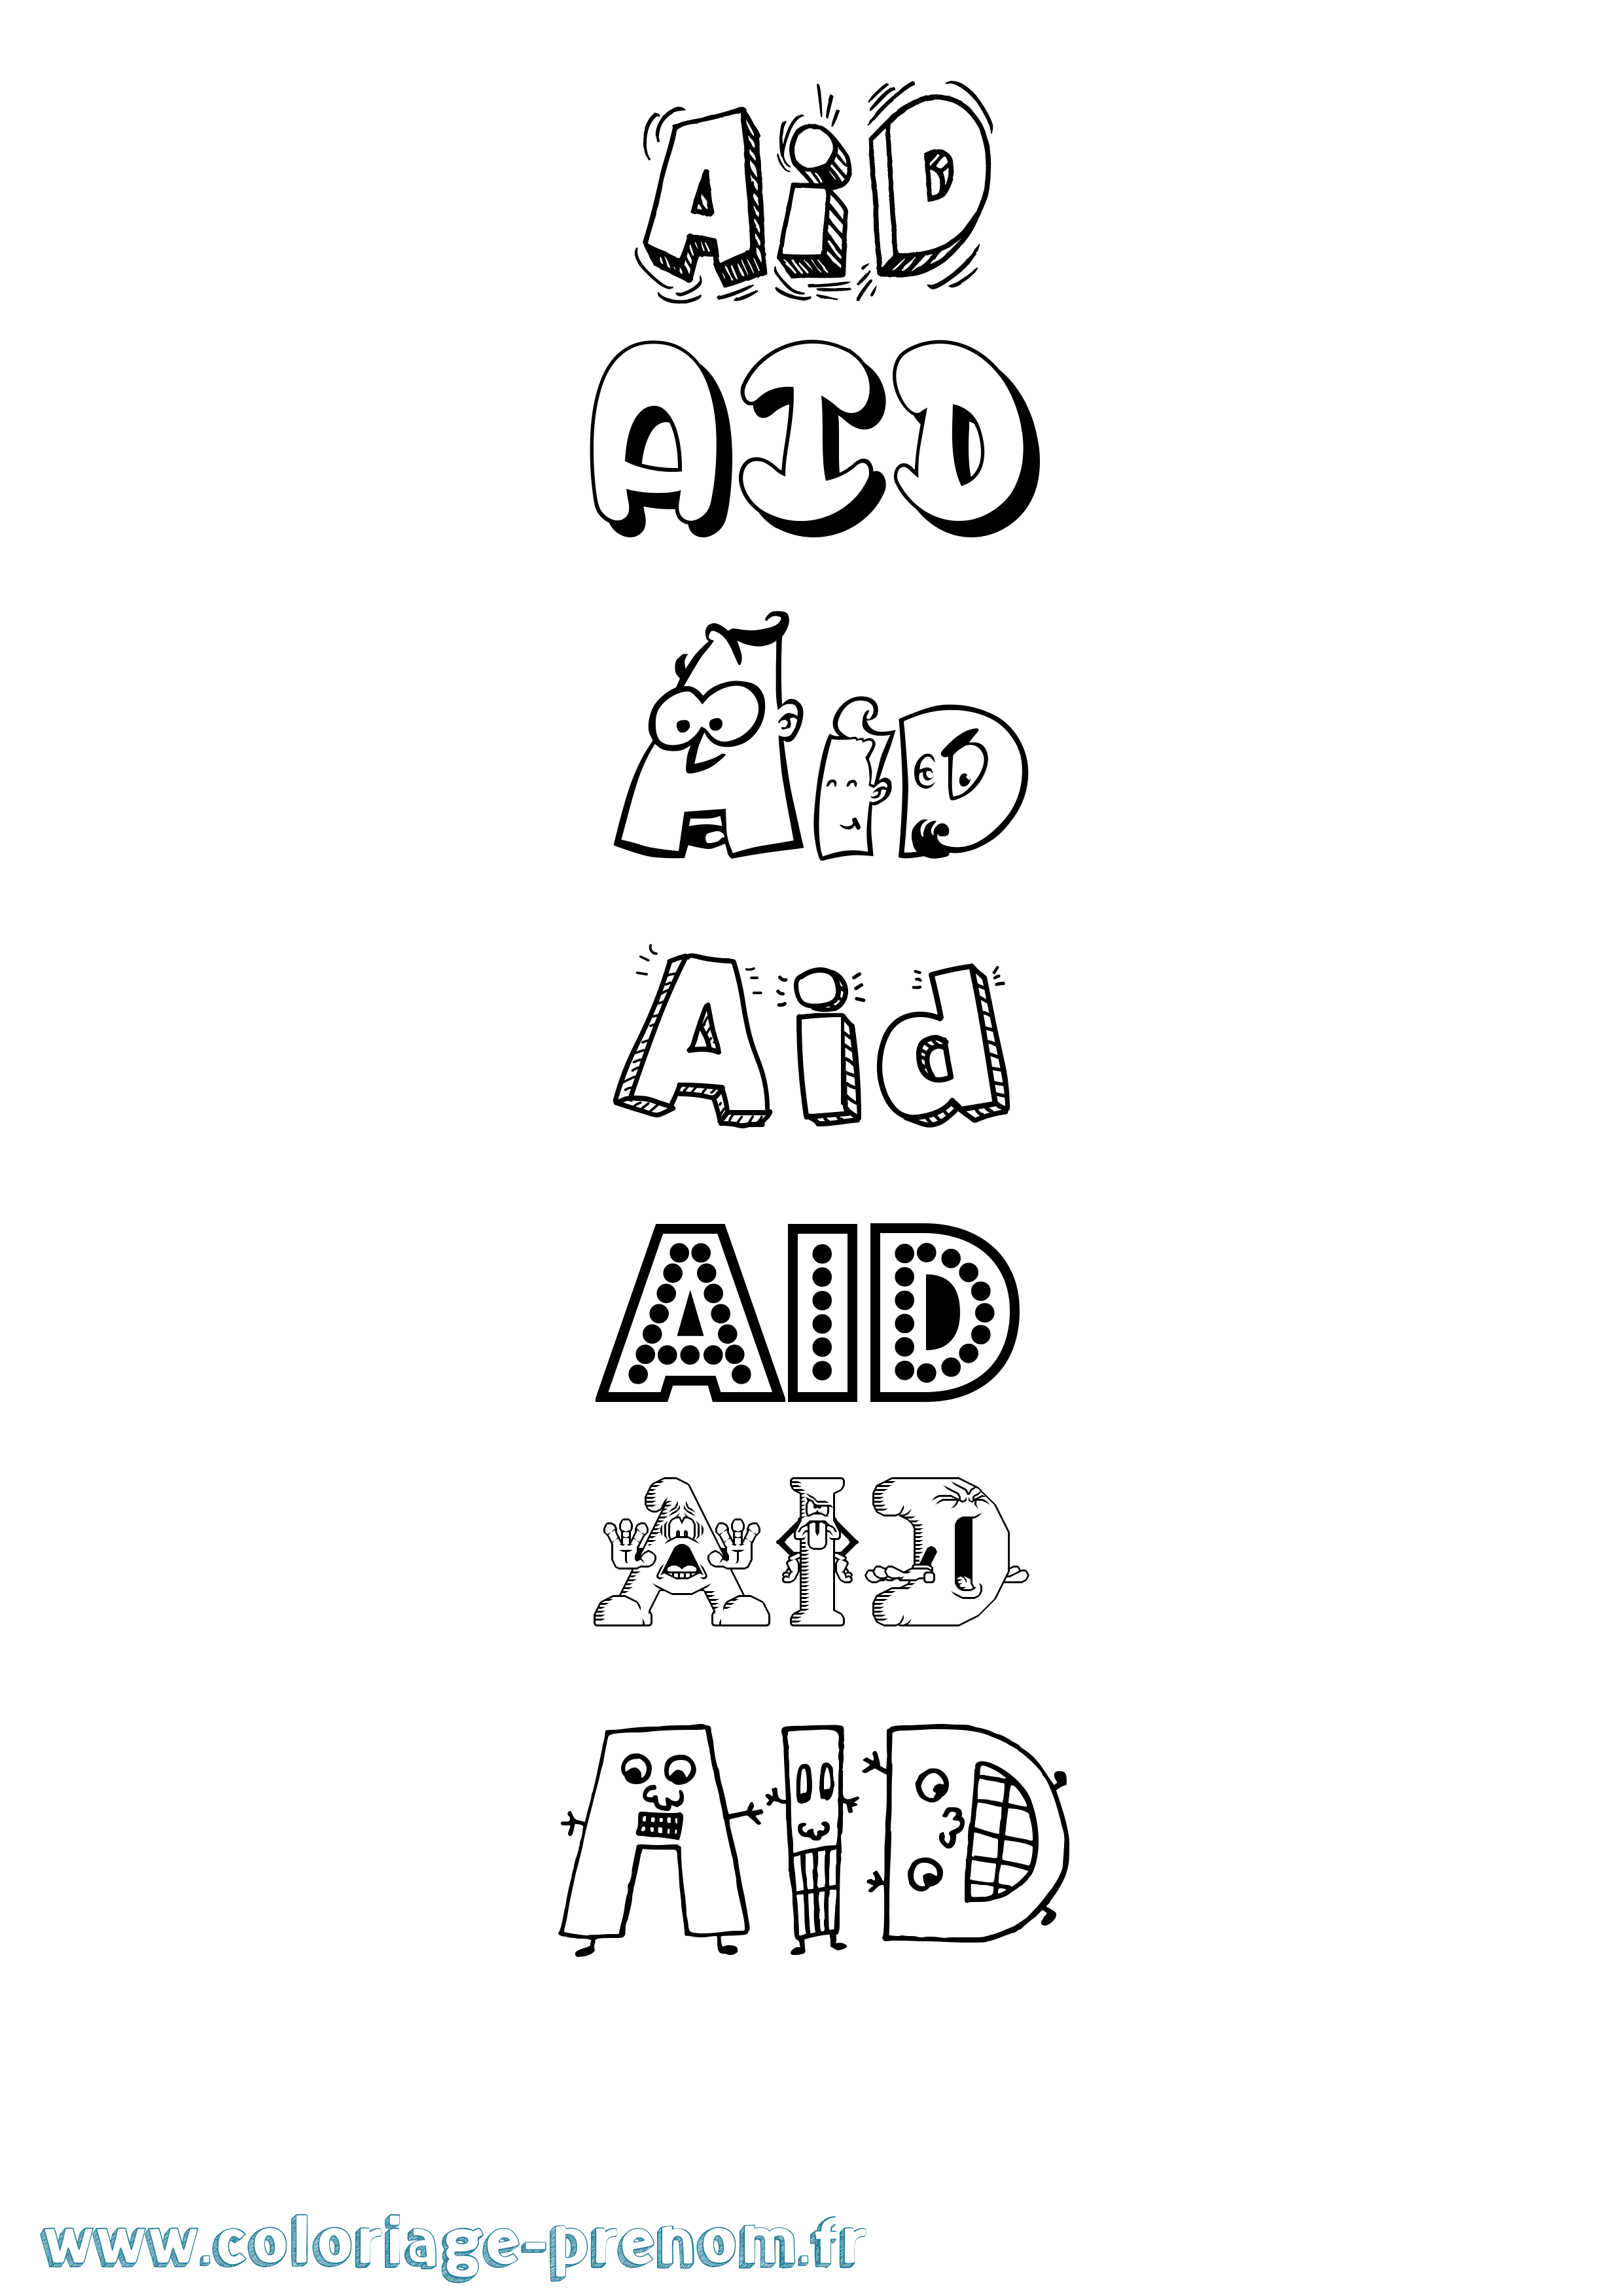 Coloriage prénom Aid Fun